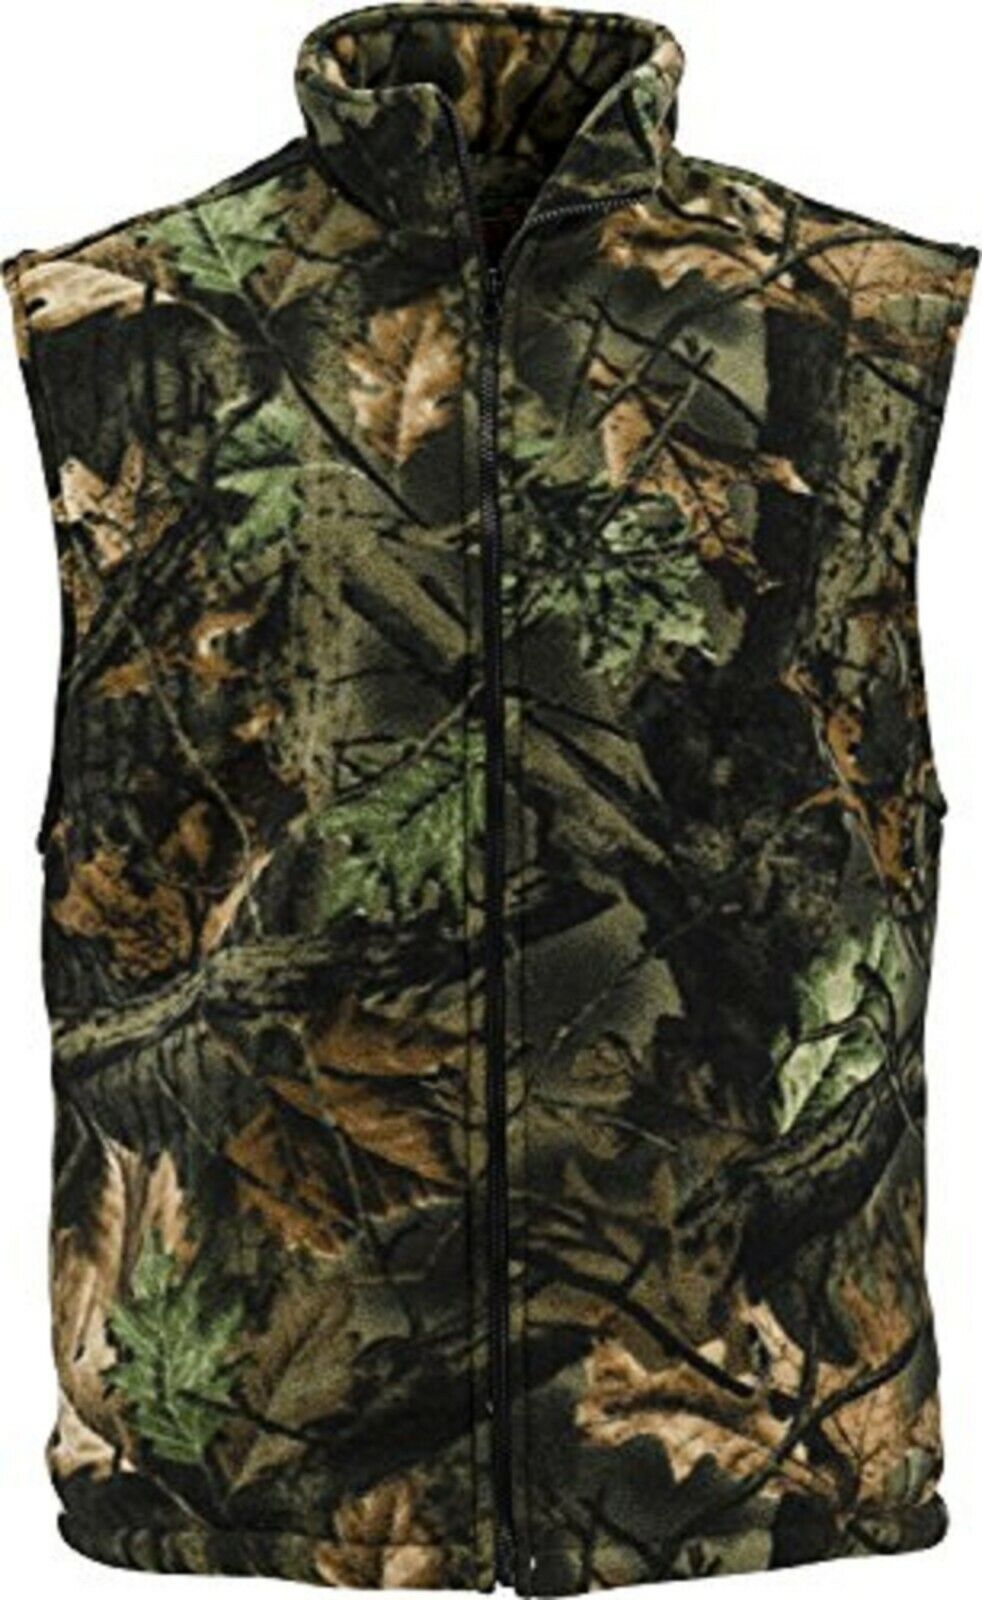 TrailCrest Chambliss Fleece Camouflage Full Zip Warm Hunting Vest